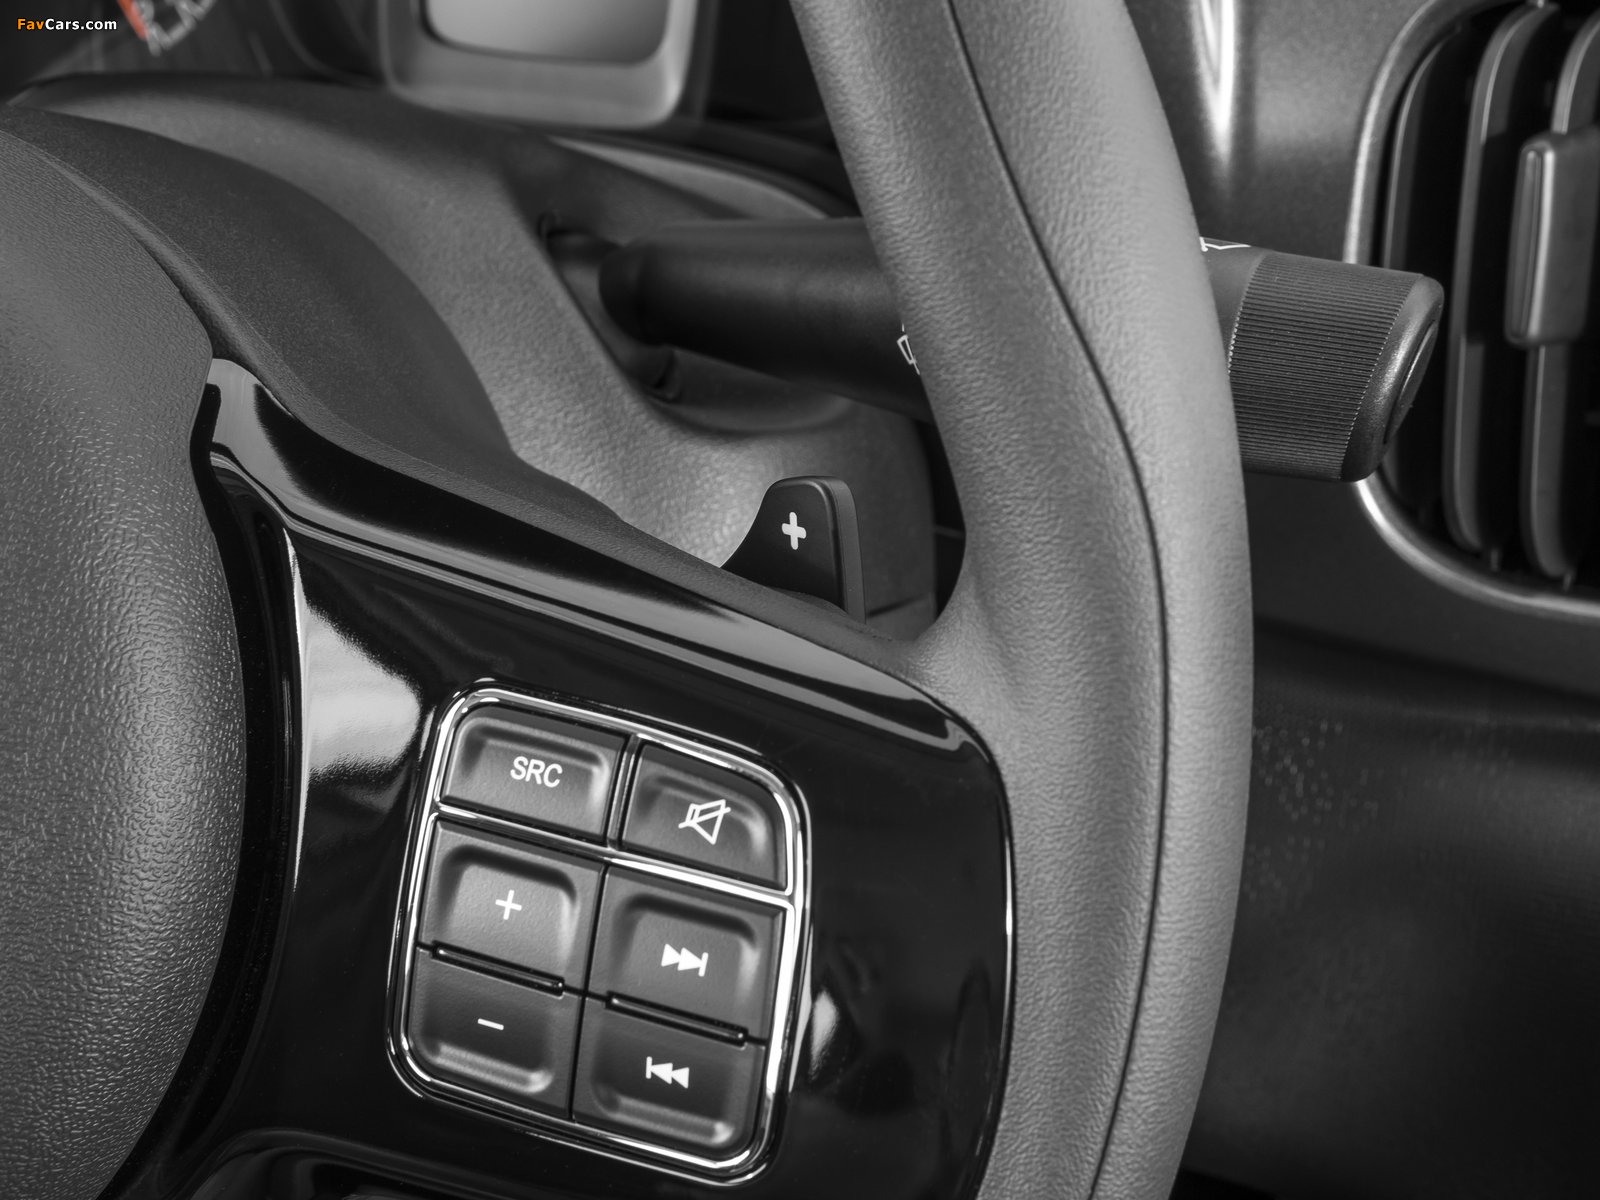 Fiat Mobi Drive GSR (344) 2017 pictures (1600 x 1200)